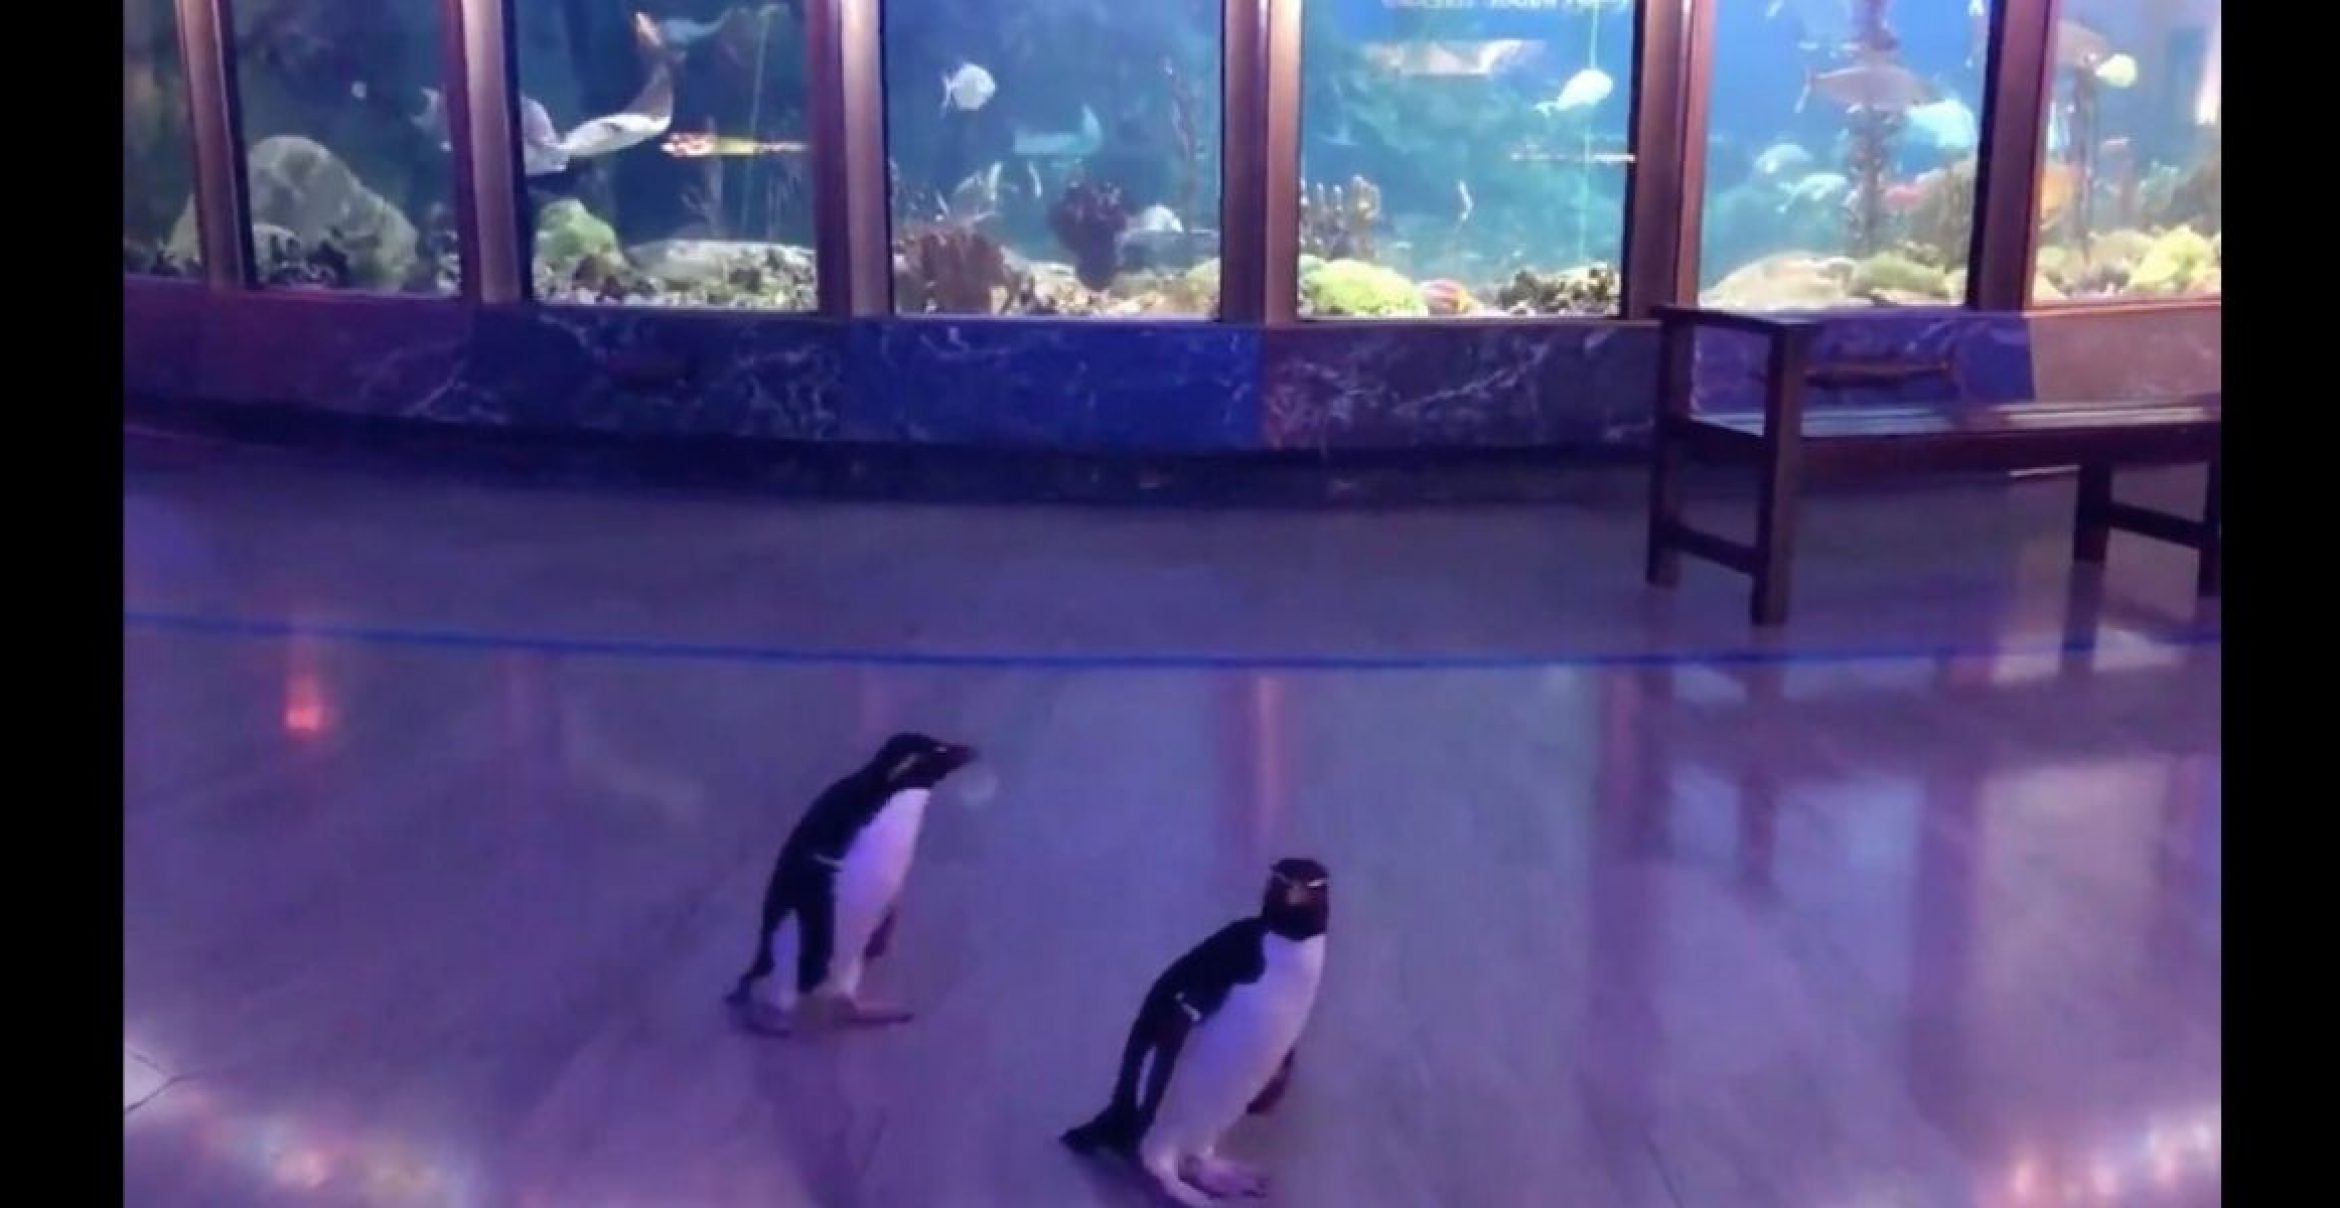 Aquarium wegen Corona geschlossen – Pinguine dürfen auf den Gängen spazieren gehen